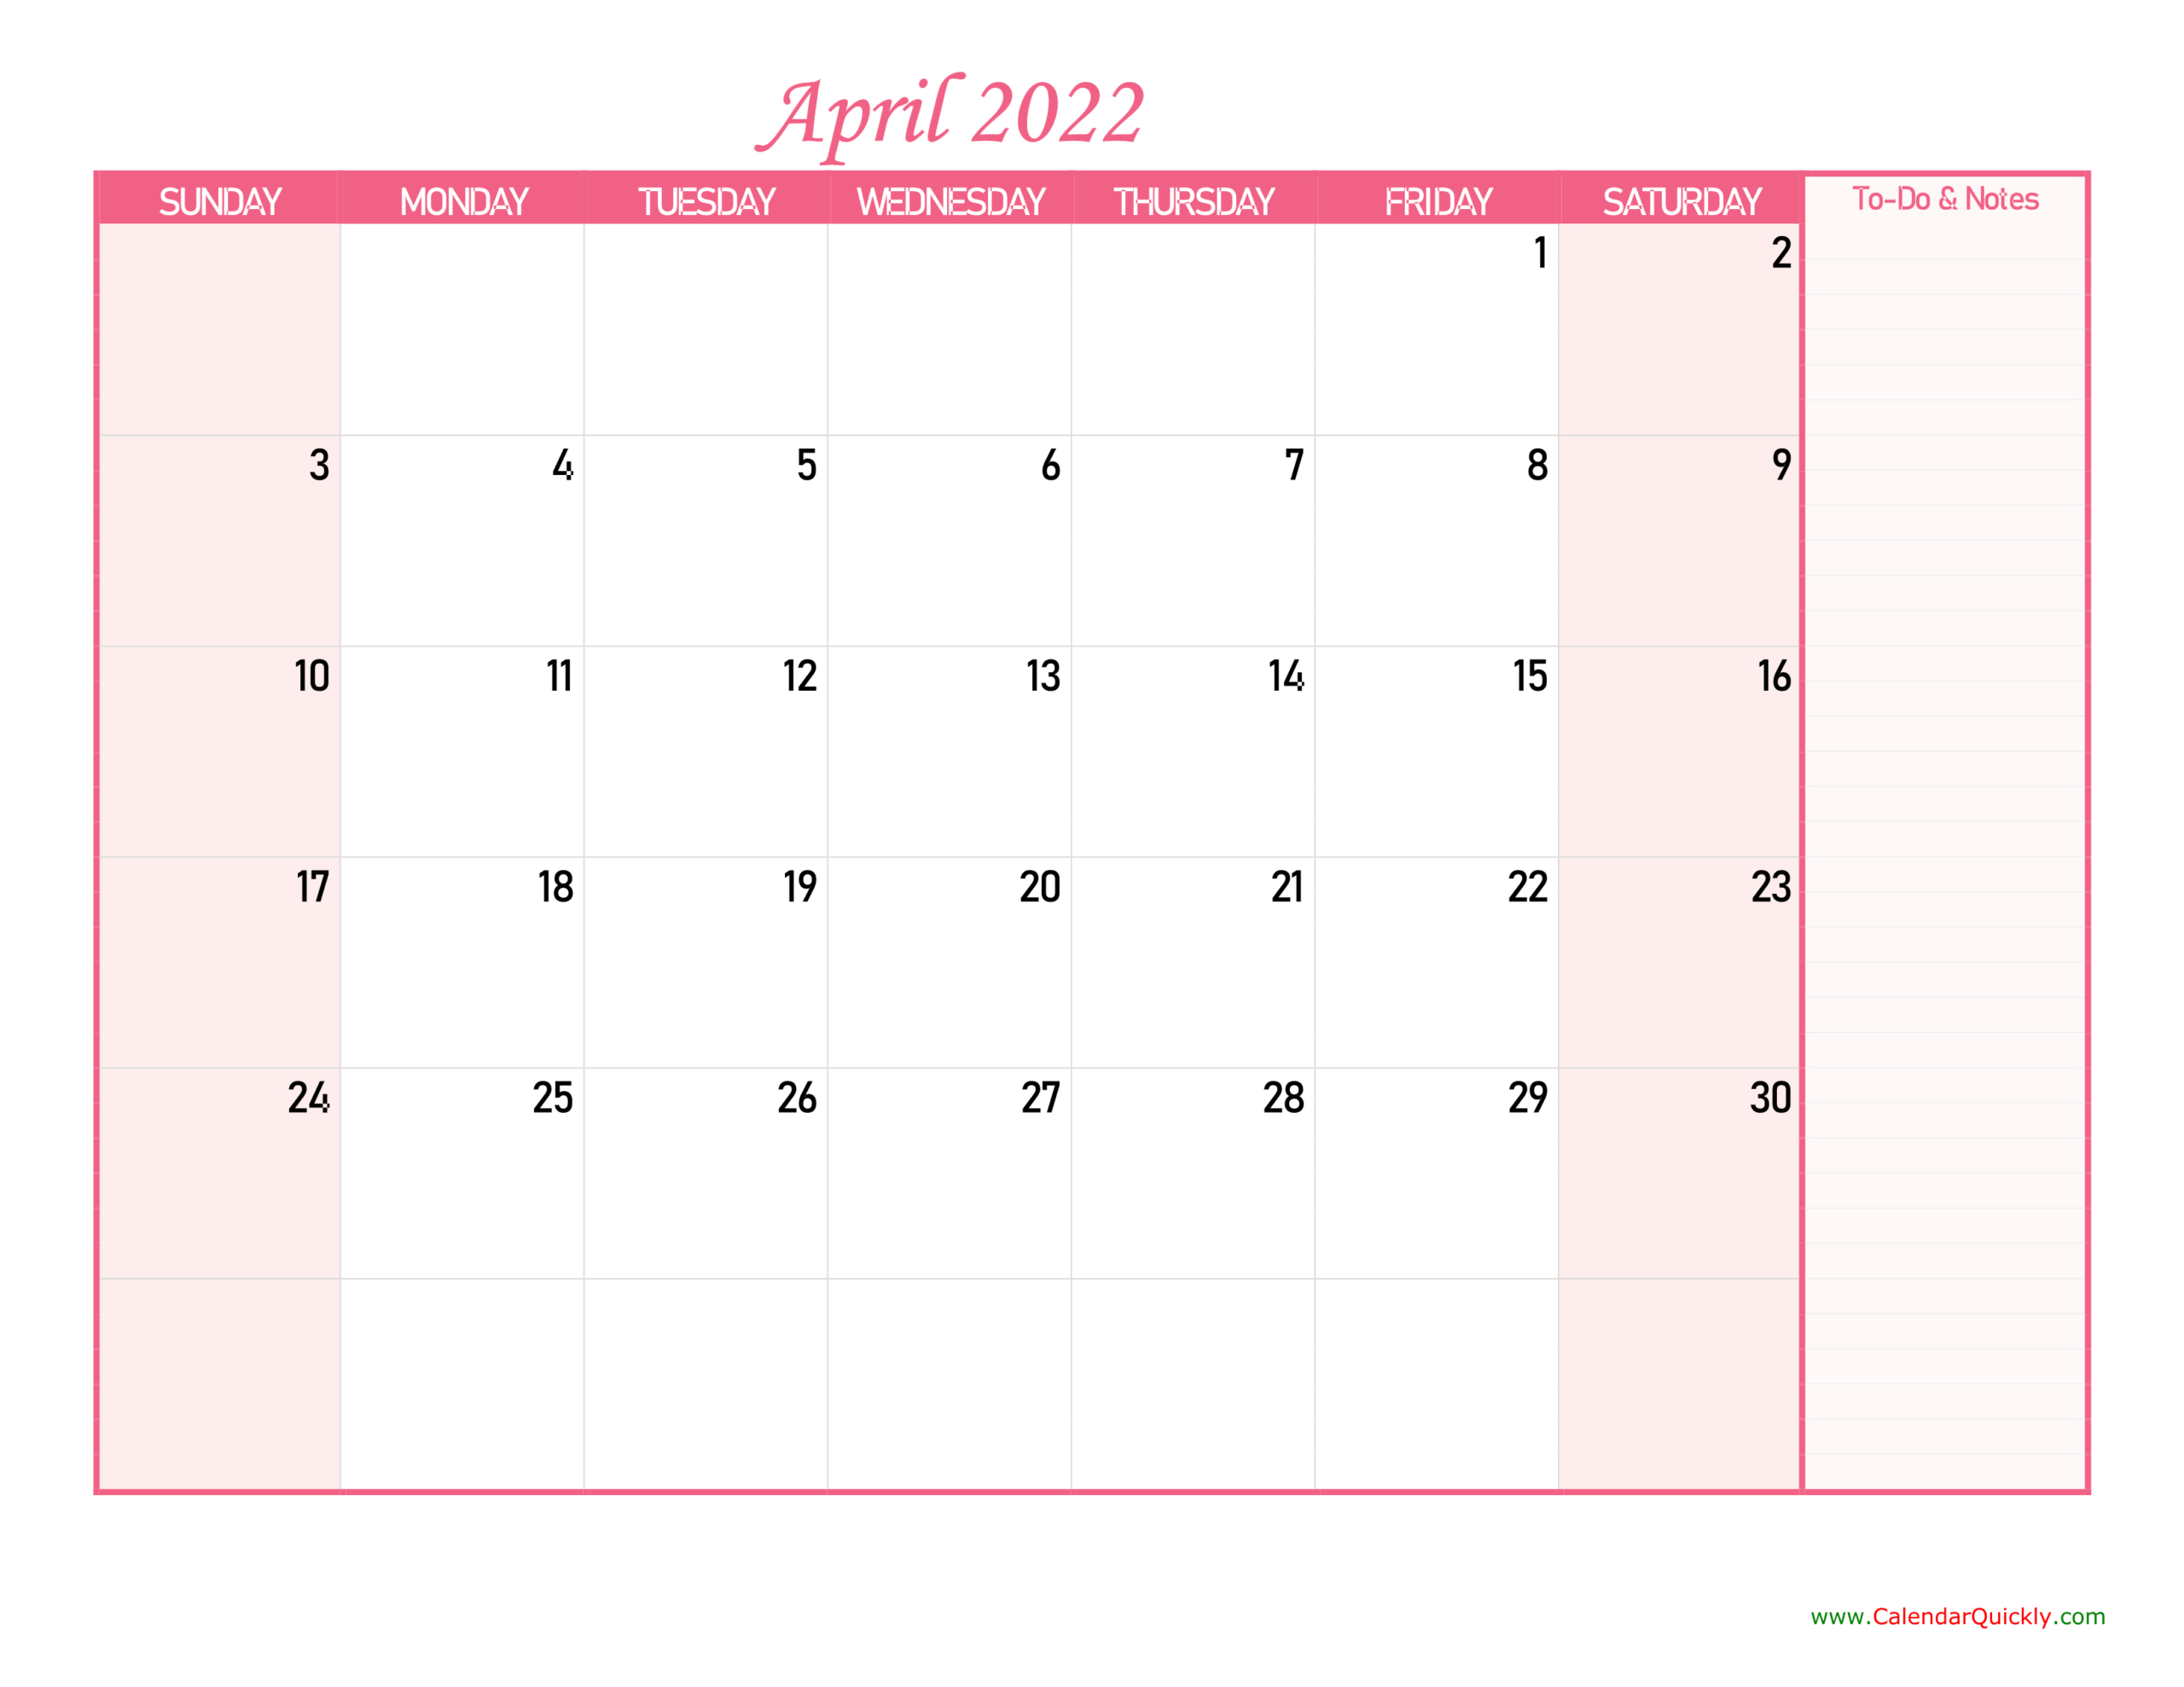 April Calendar 2022 With Notes | Calendar Quickly